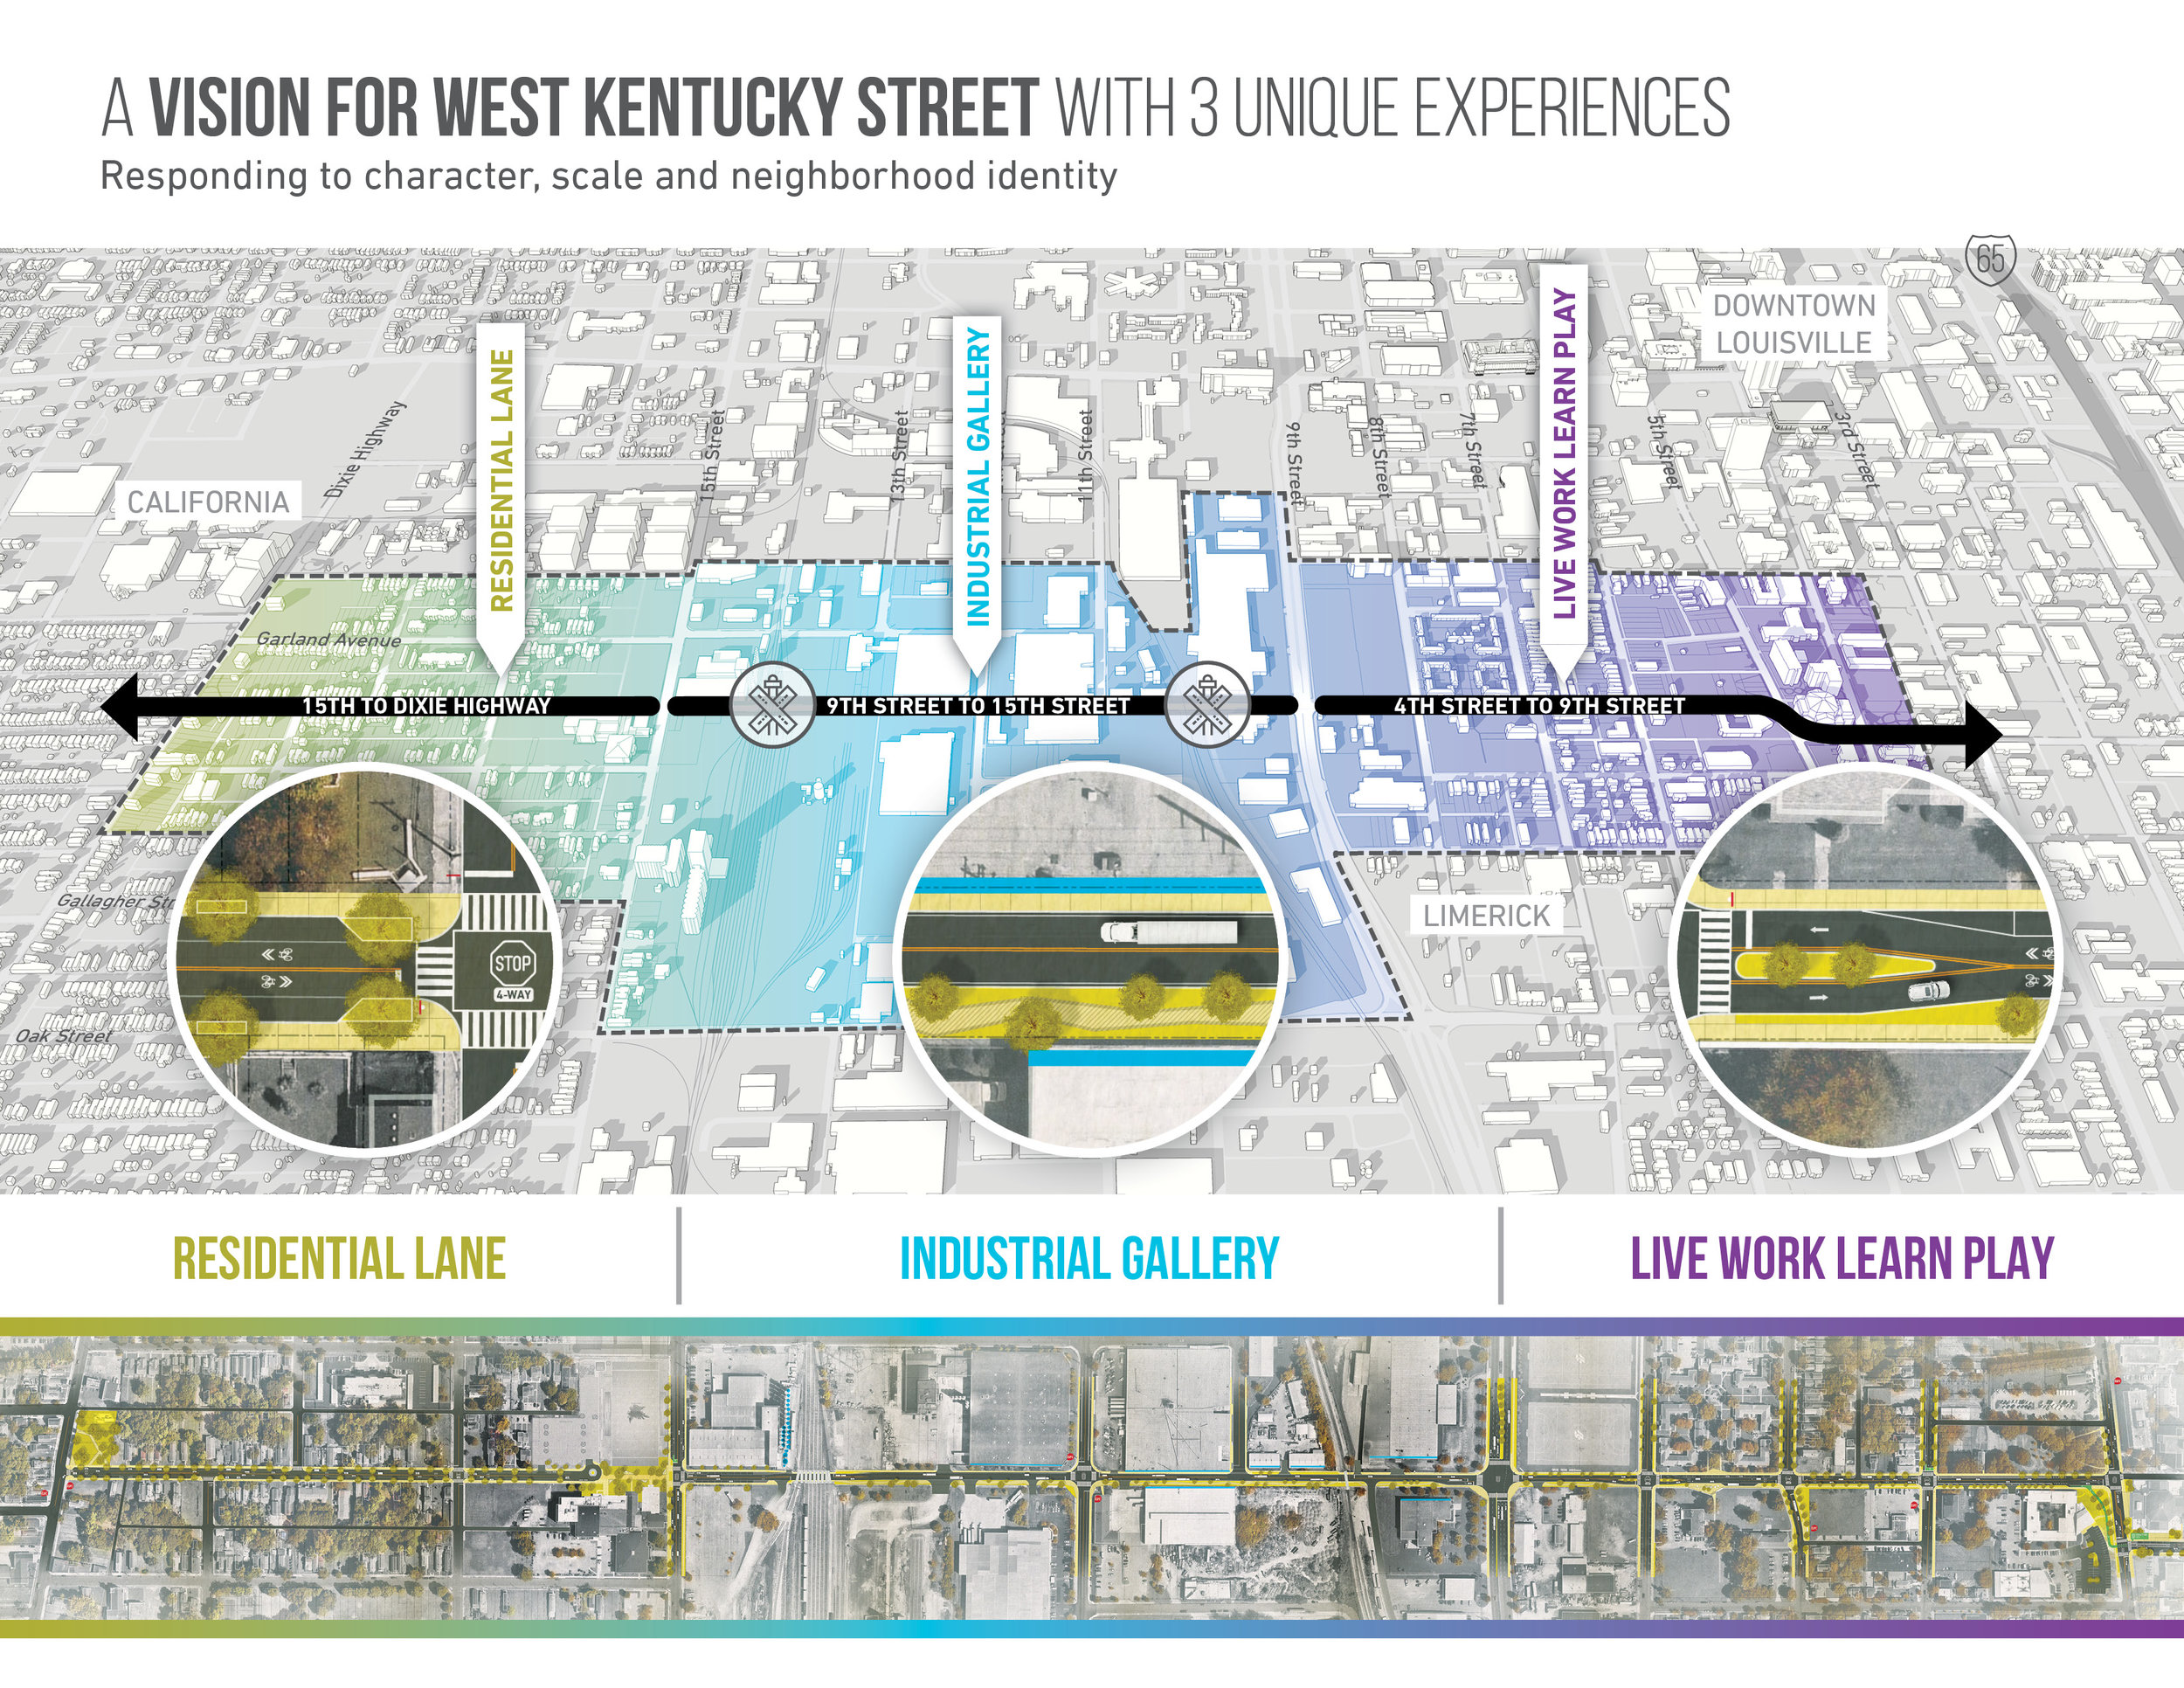 West Kentucky Street - Image1.jpg